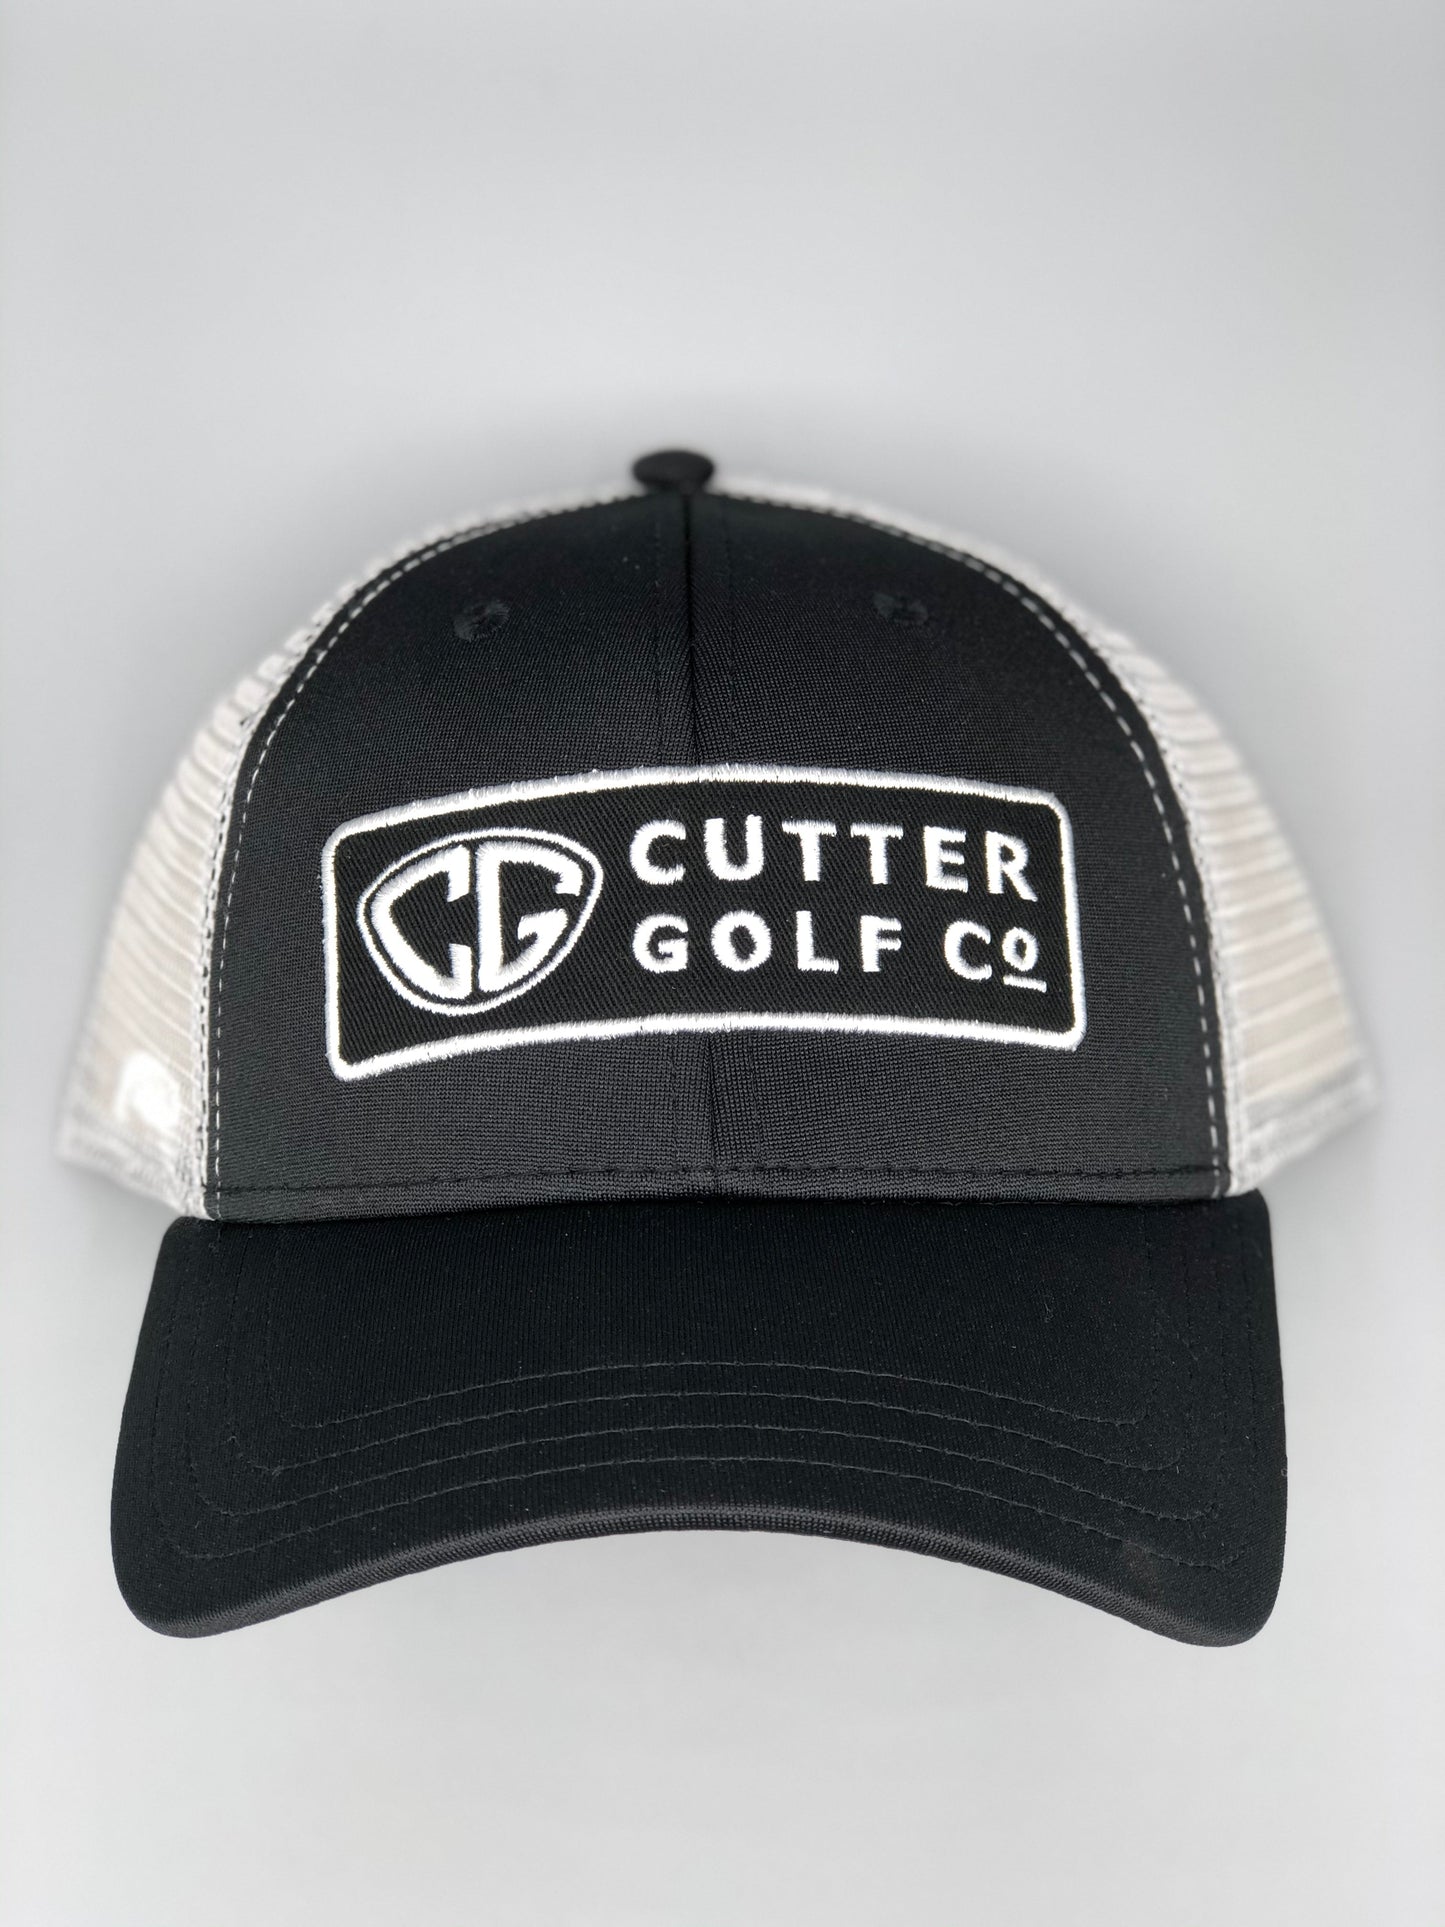 Cutter Golf Classic Truckers Hat by Cutter Golf